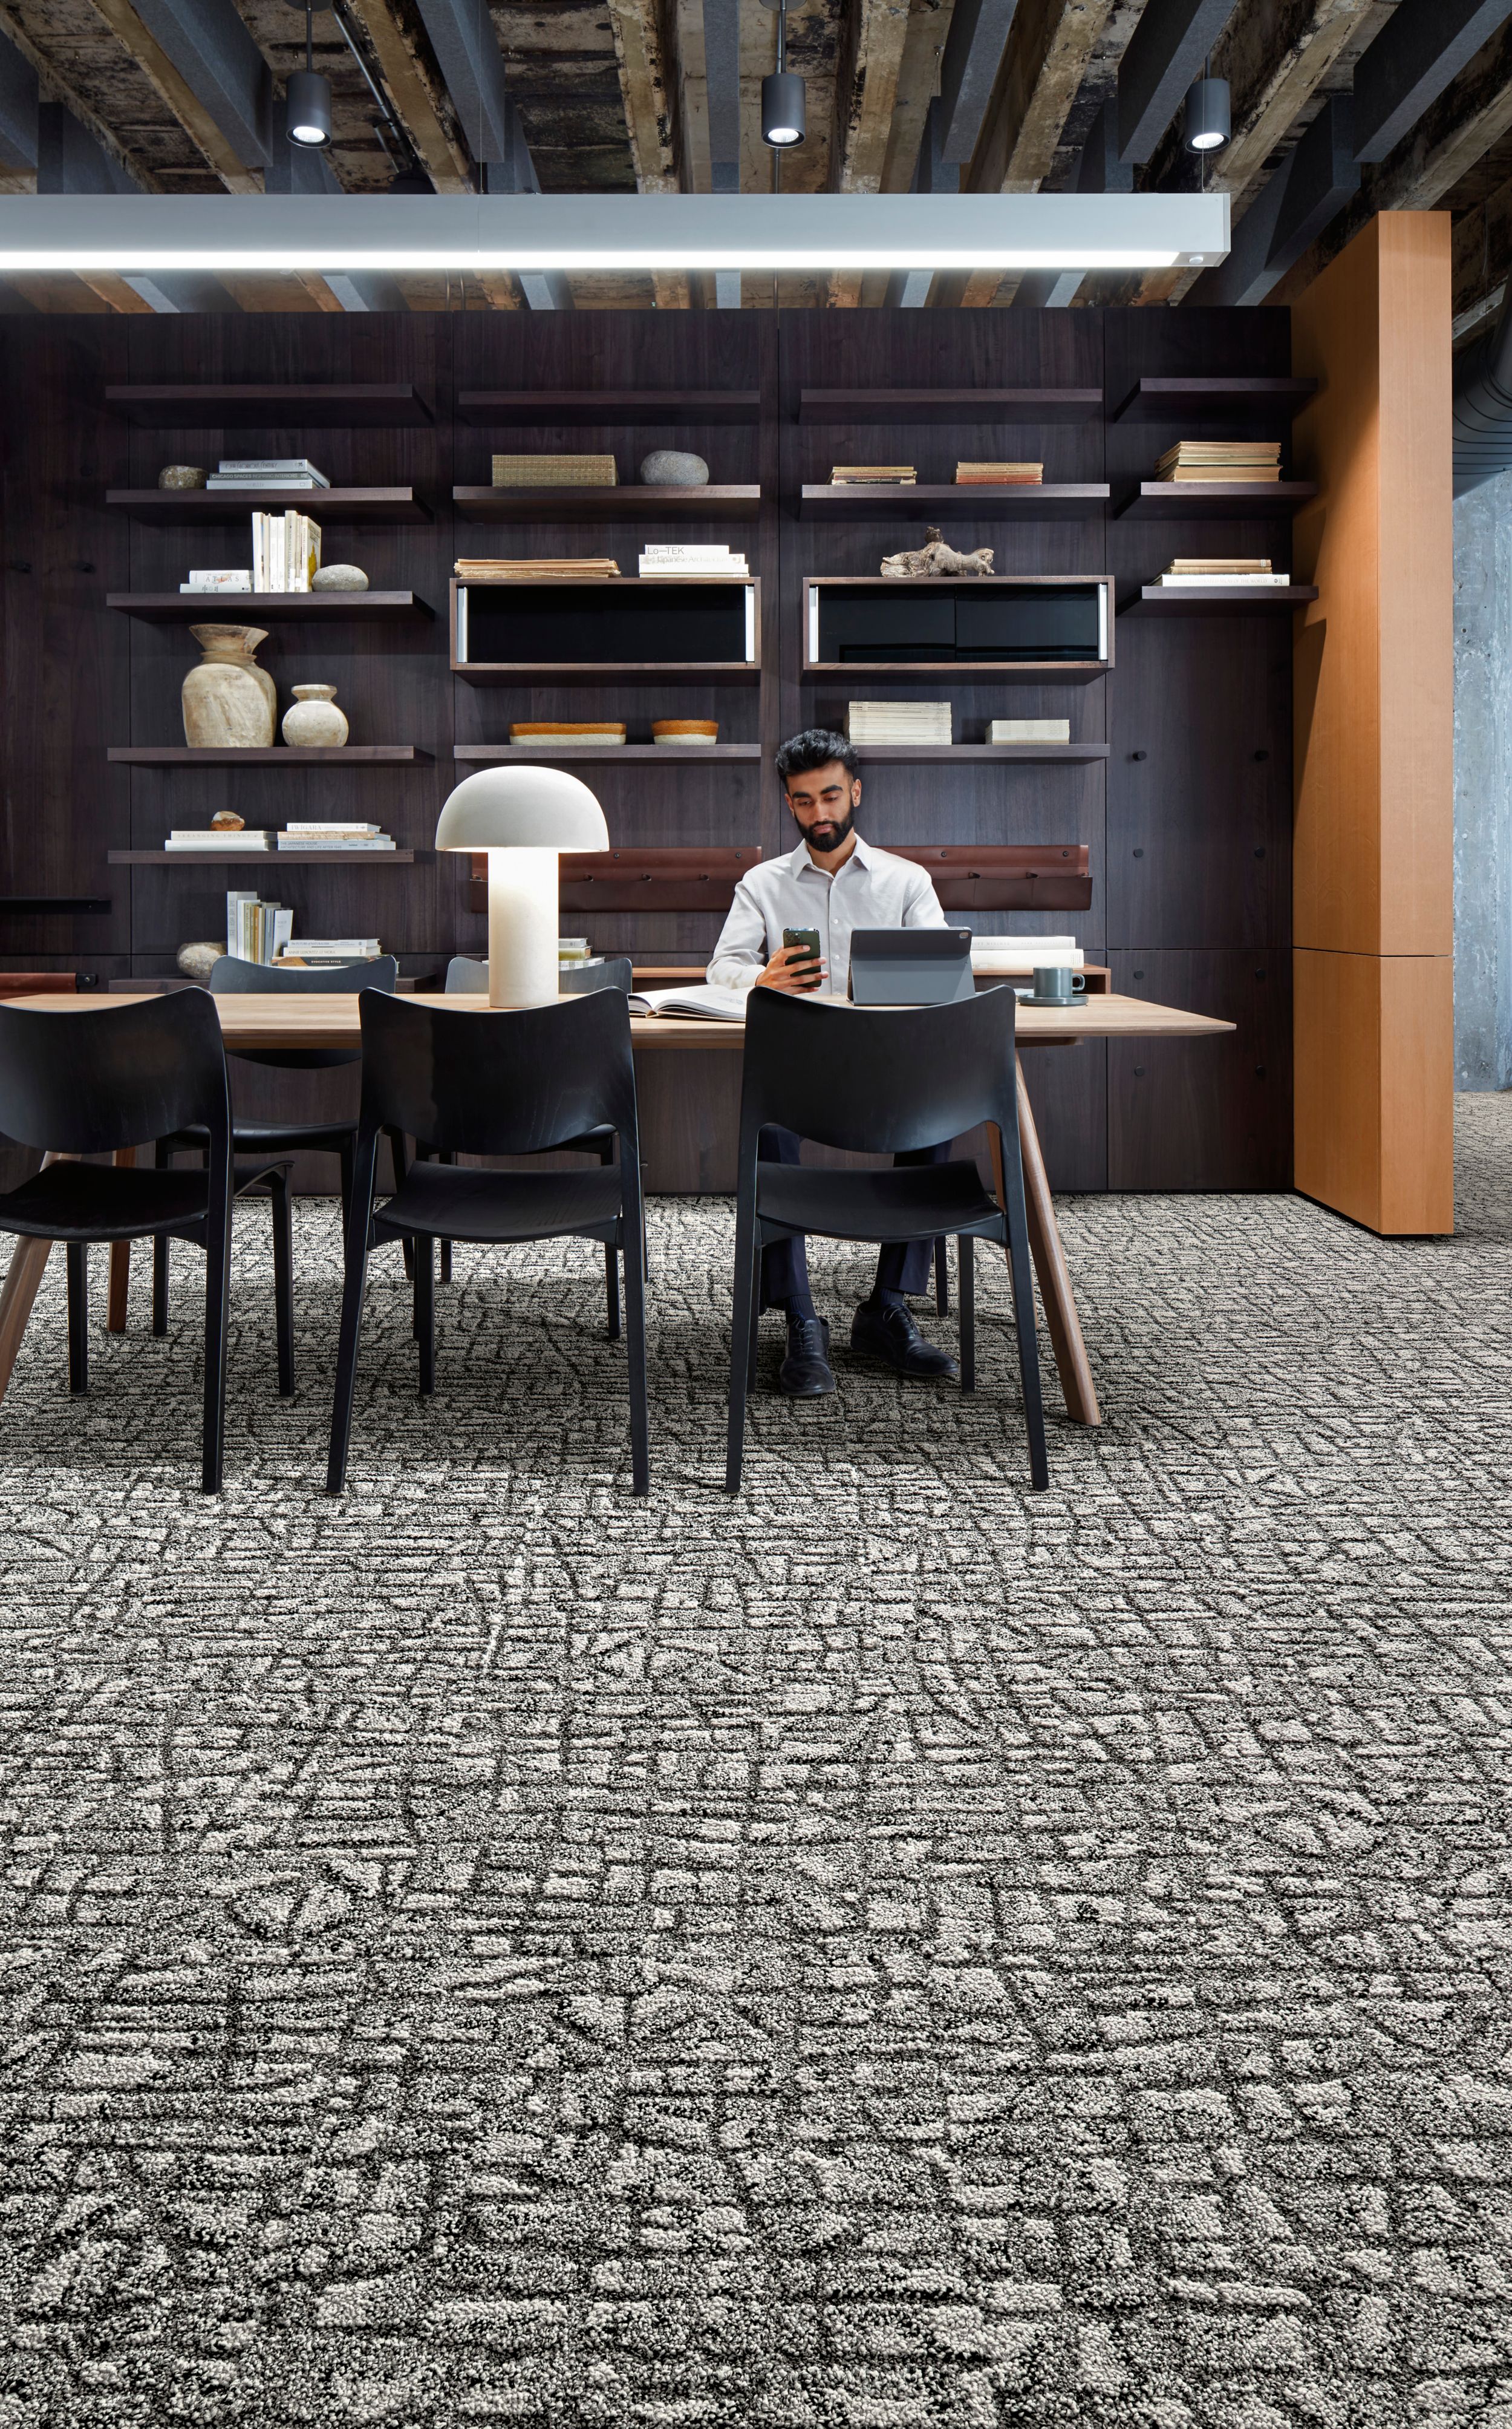 Interface E610 carpet tile in conference room imagen número 1